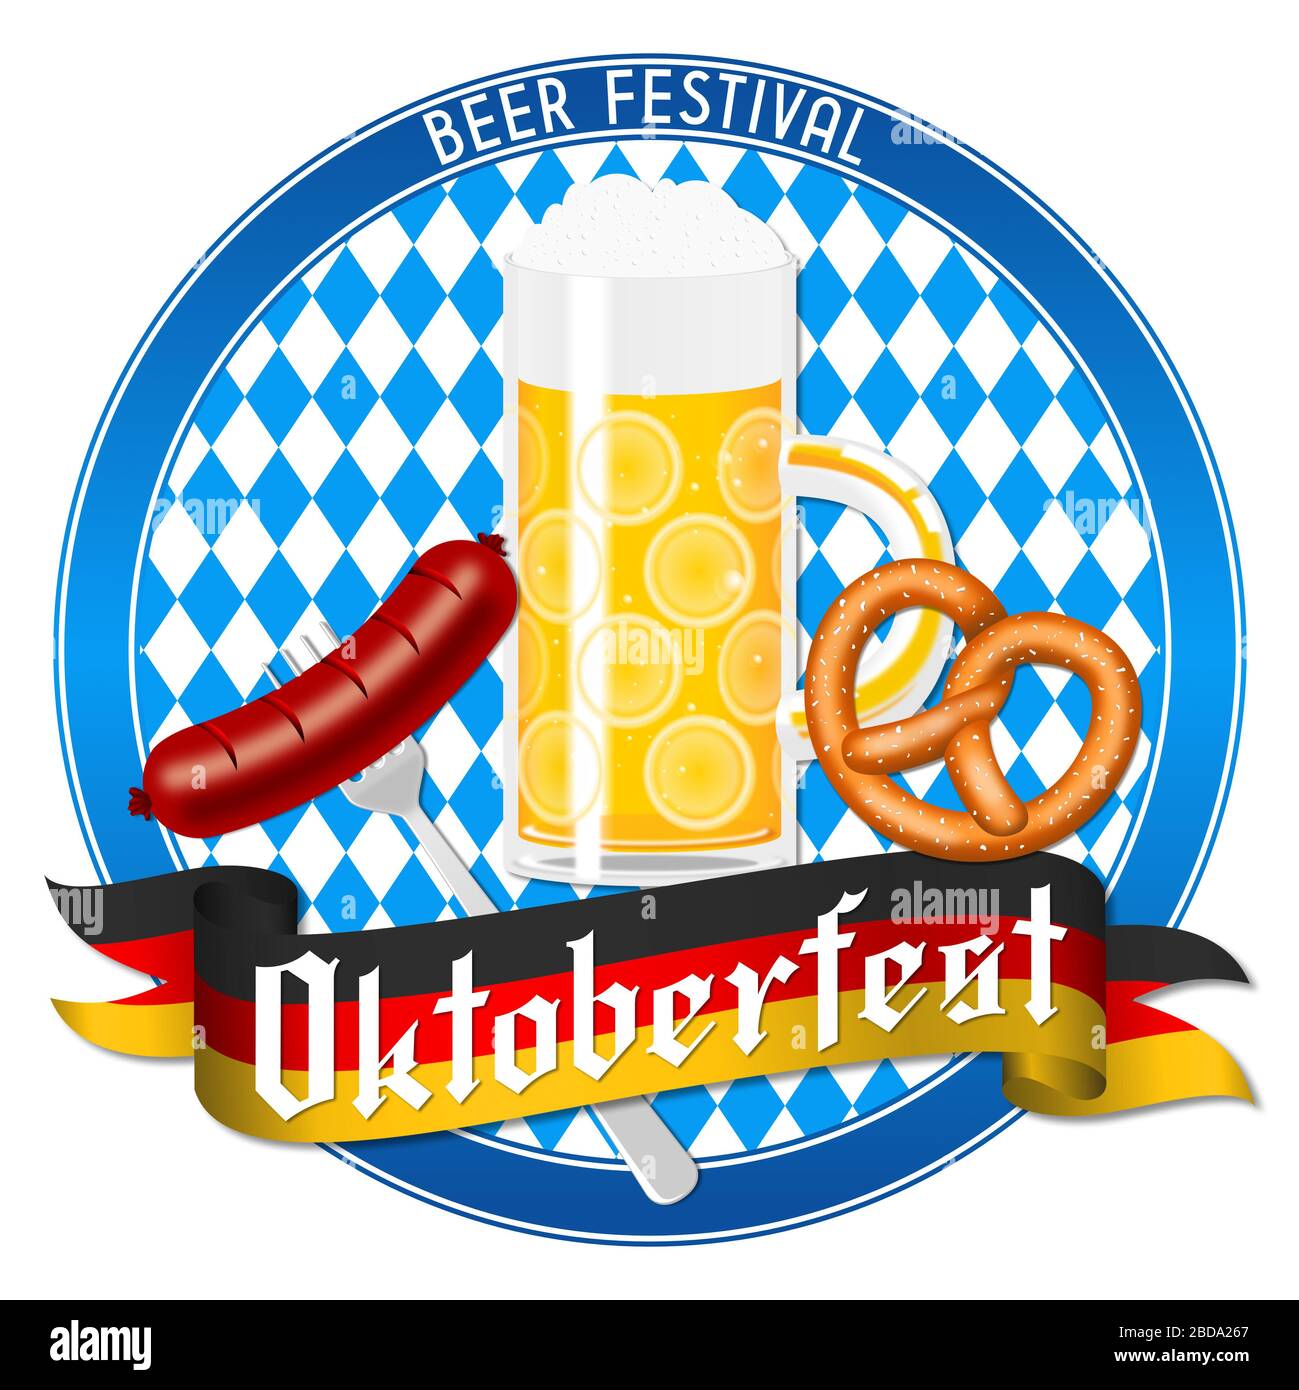 Oktoberfest illustration - beer, sausage, pretzel Stock Photo